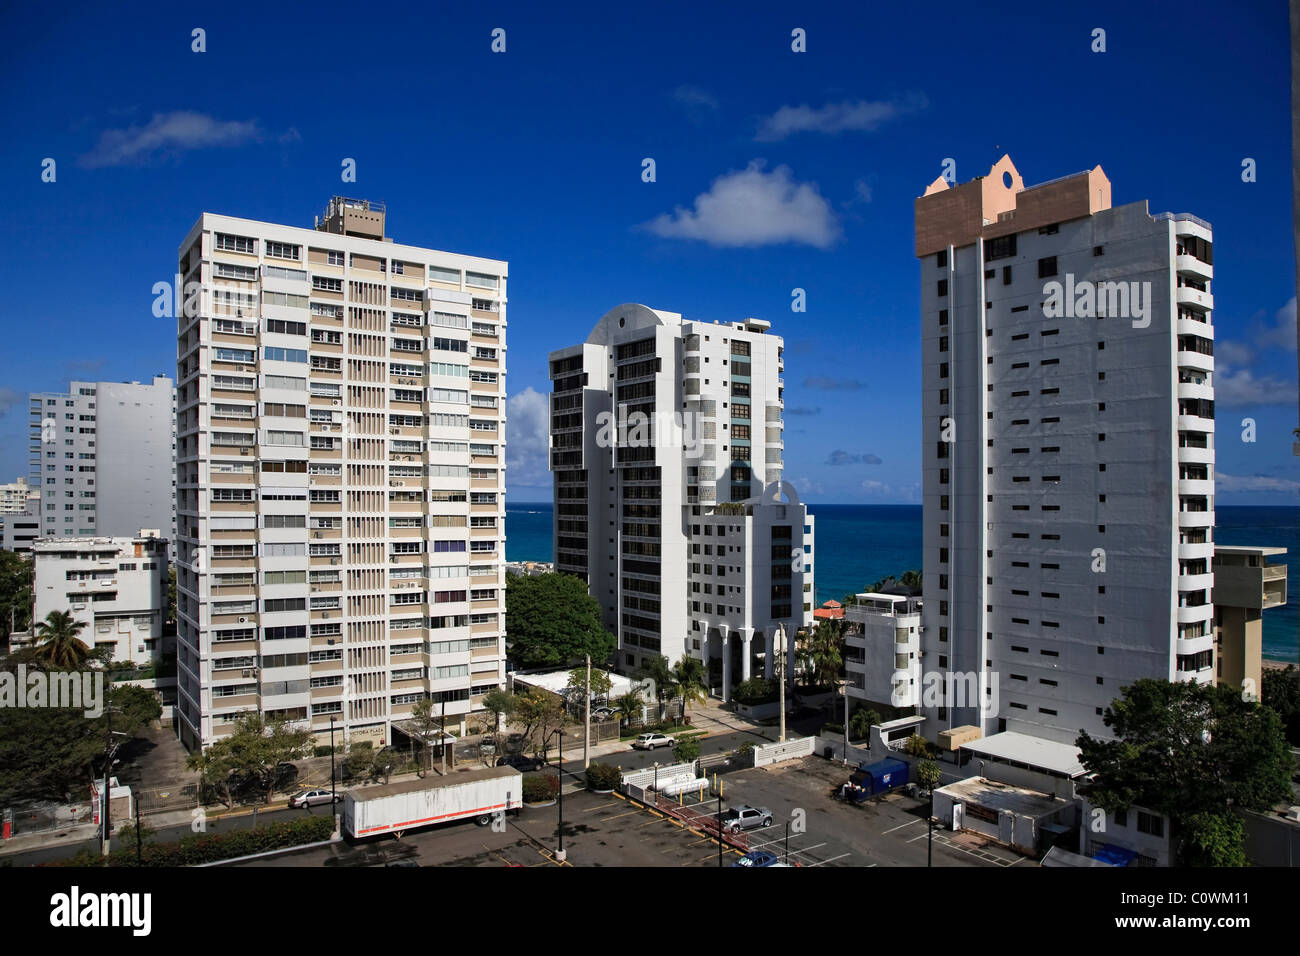 Usa, Caribbean, Puerto Rico, San Juan, Old Town, Condado Resort Area Stock Photo